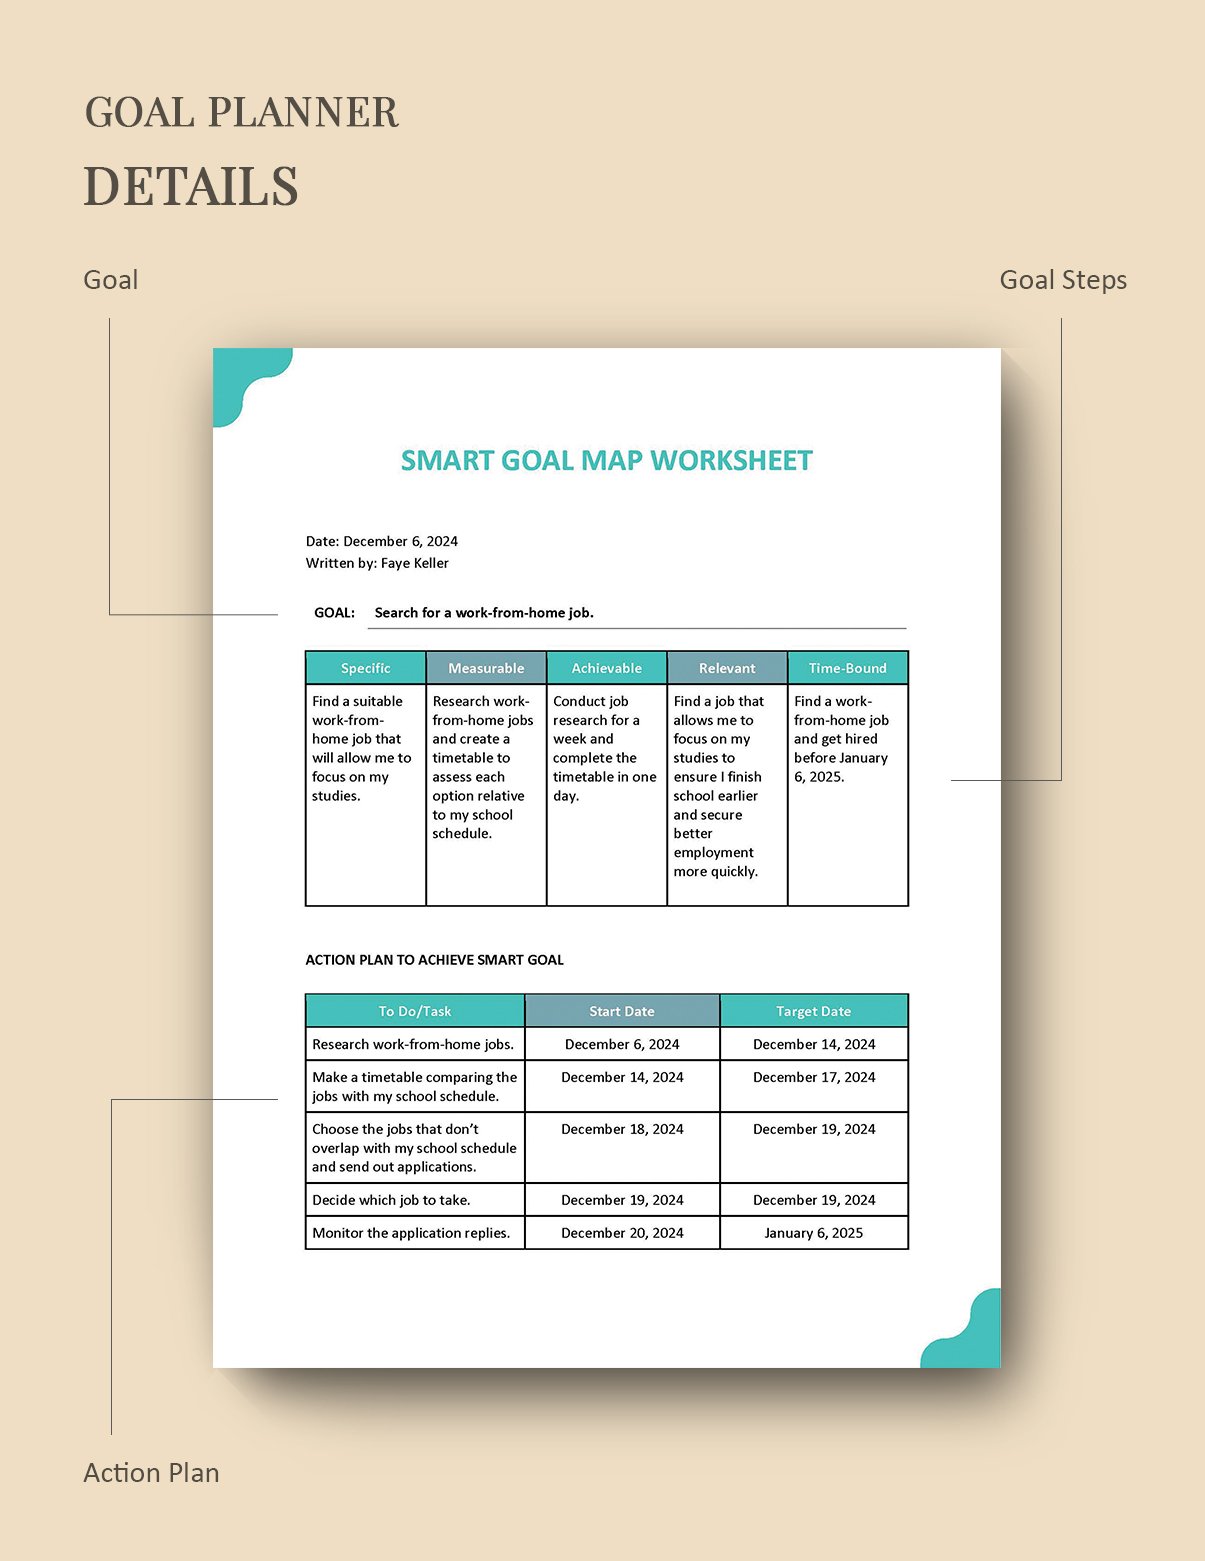 Smart Goal Map Worksheet template